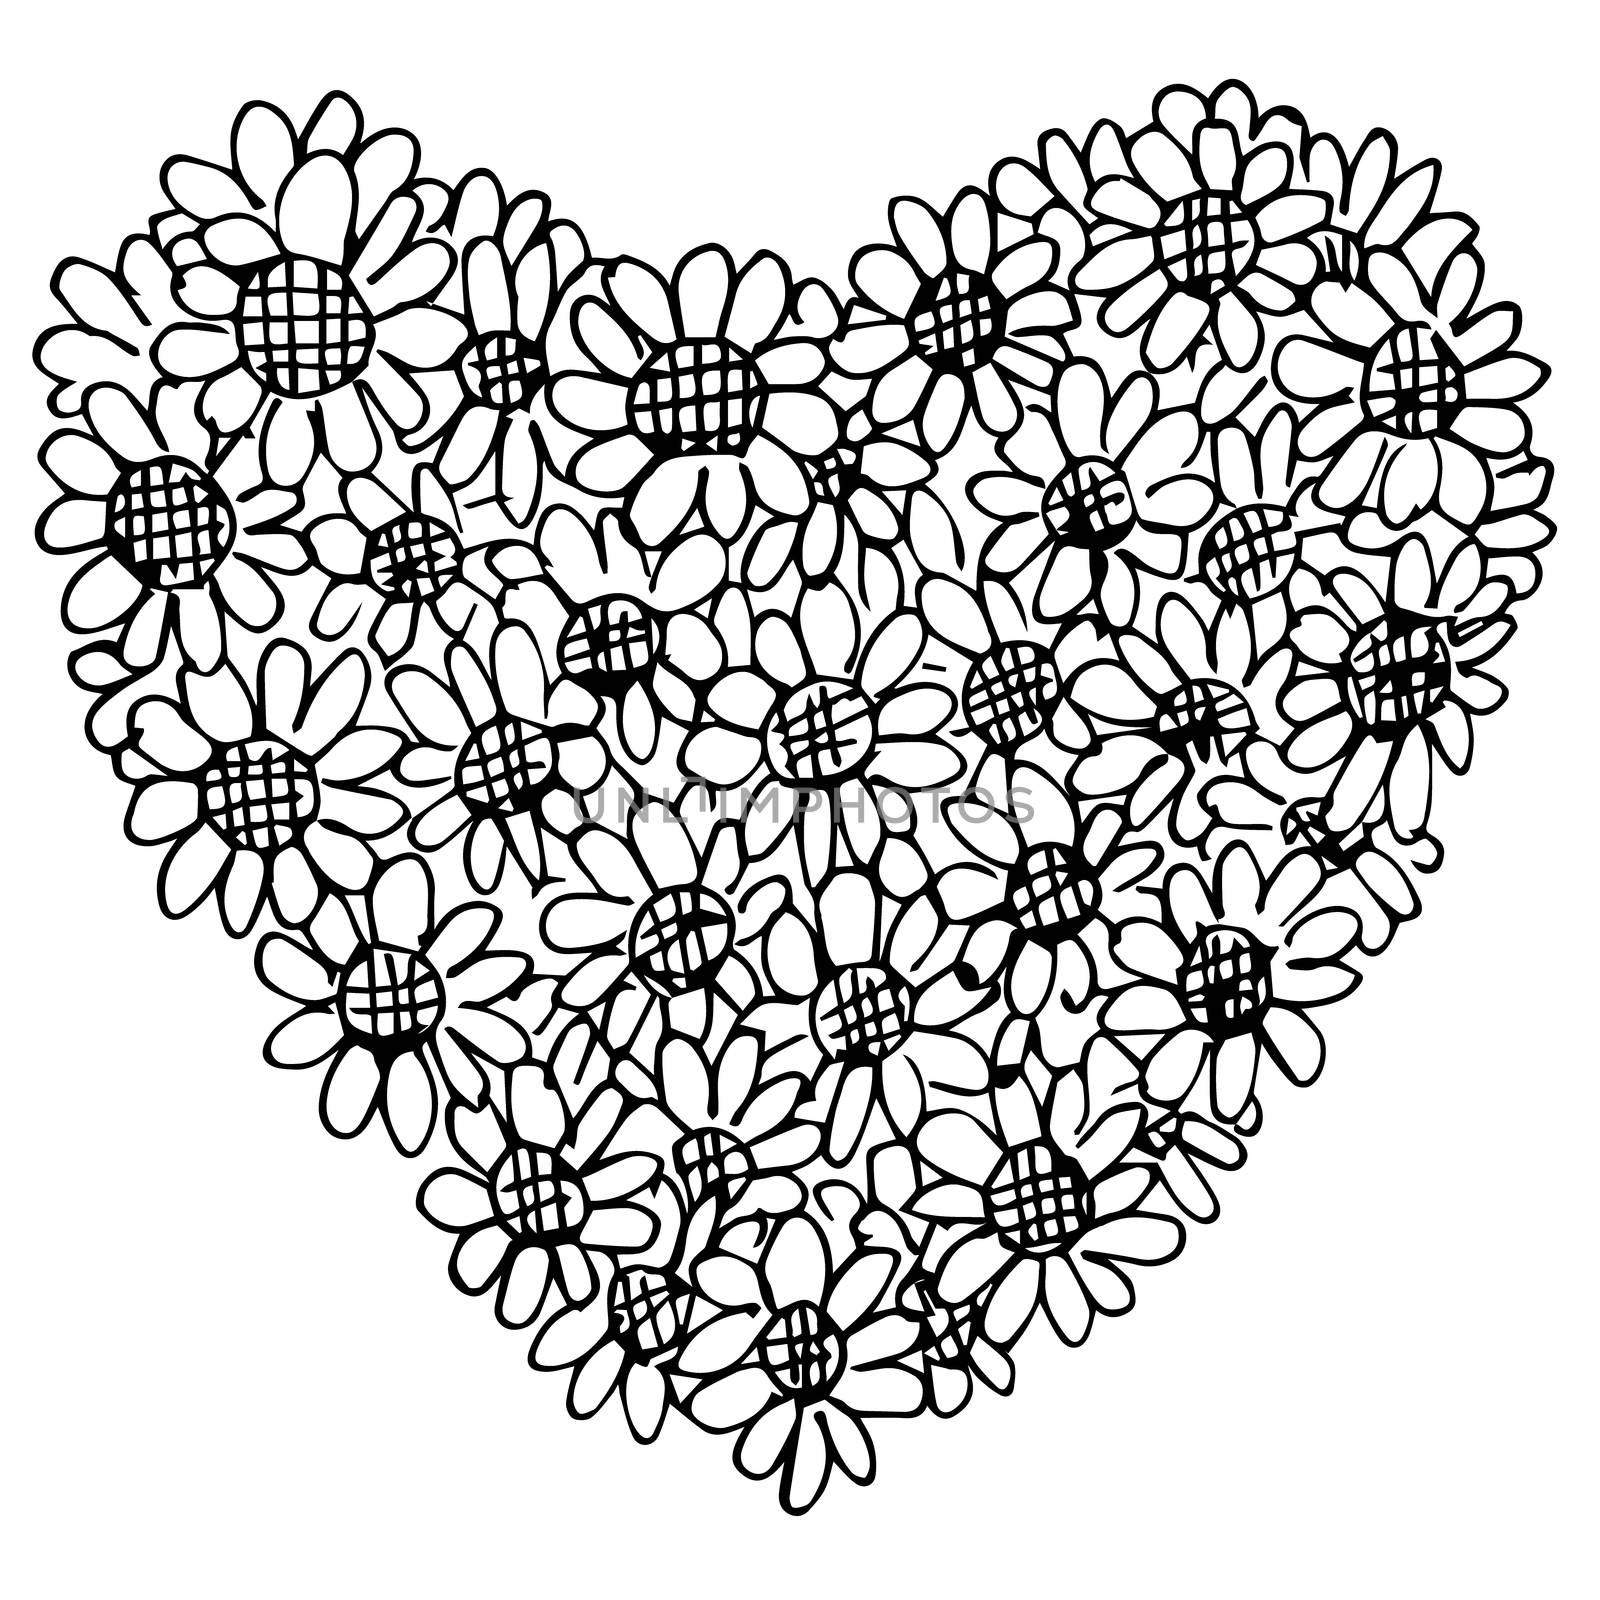 Freehand illustration of retro flower design heart shape by simpleBE